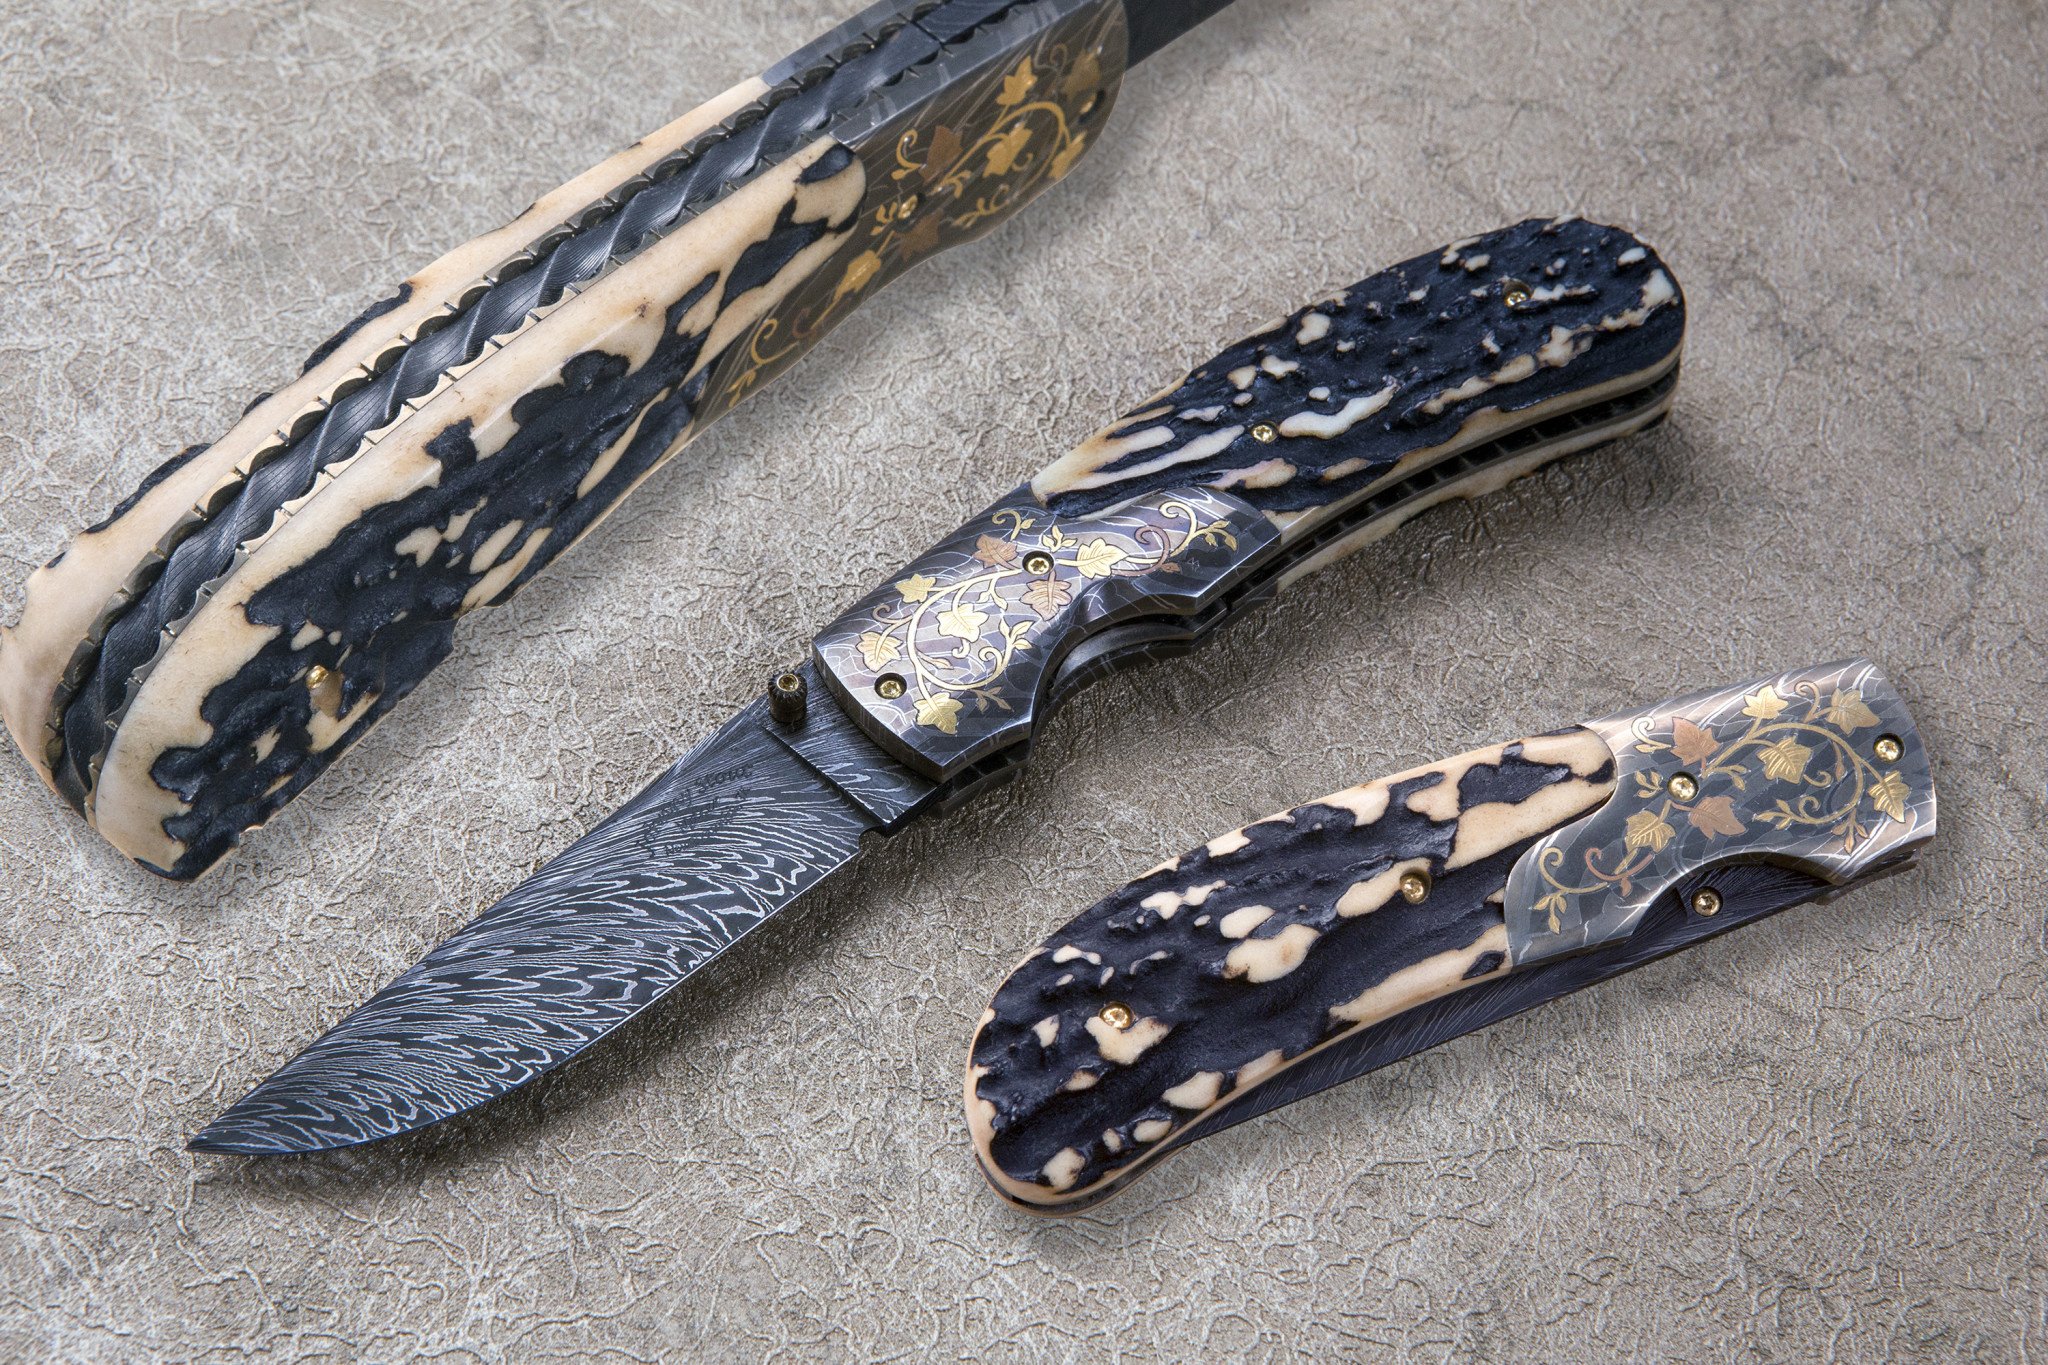 Arkansas Superstick Ceramic Knife Sharpener - Bear Claw Knife & Shear